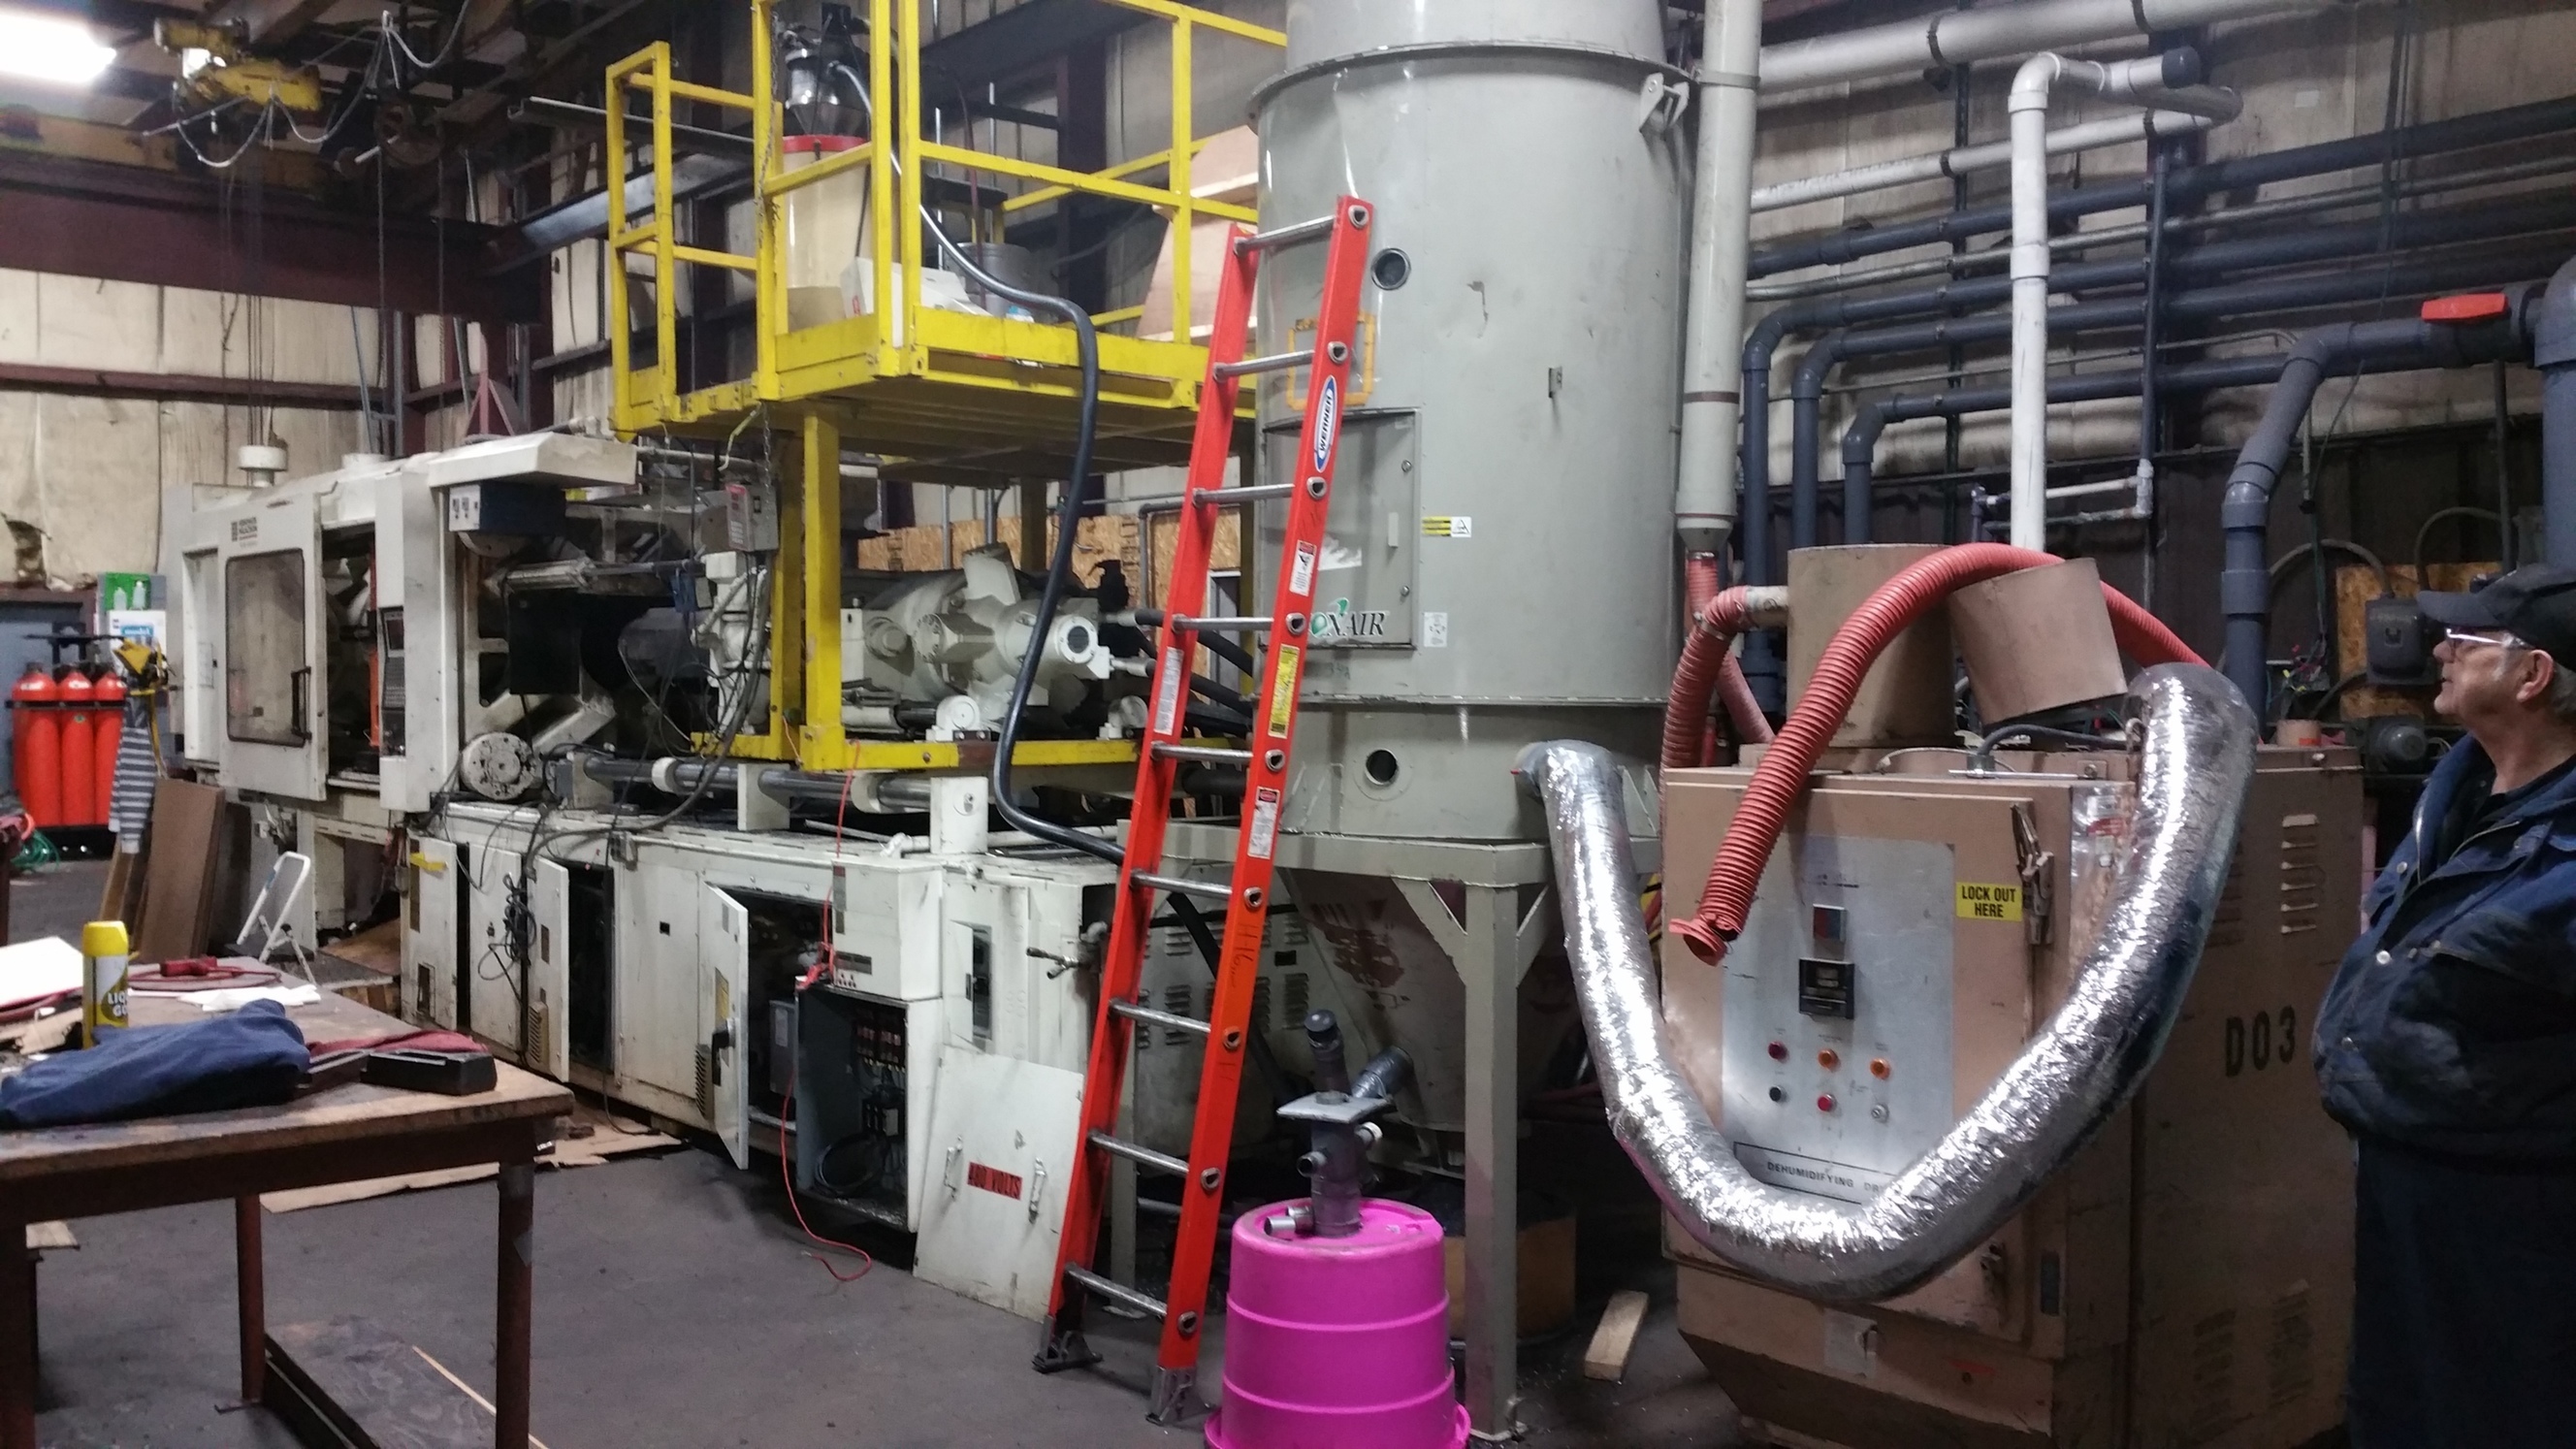 500 Ton Capacity Cincinnati Plastic Injection Molding Machine For Sale